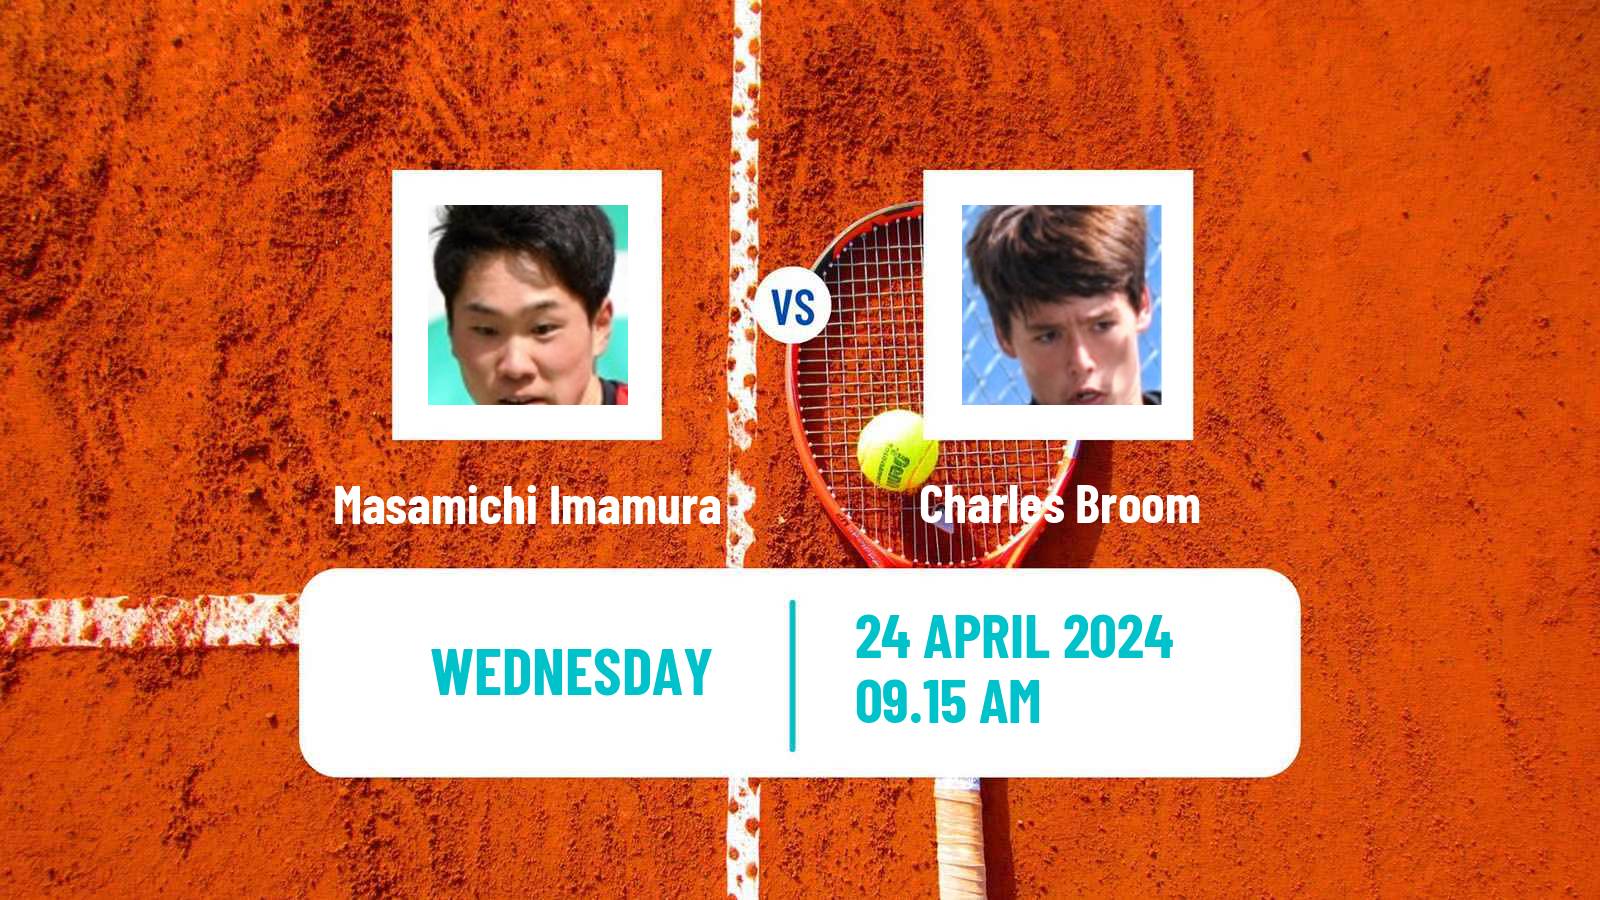 Tennis ITF M25 Nottingham Men Masamichi Imamura - Charles Broom